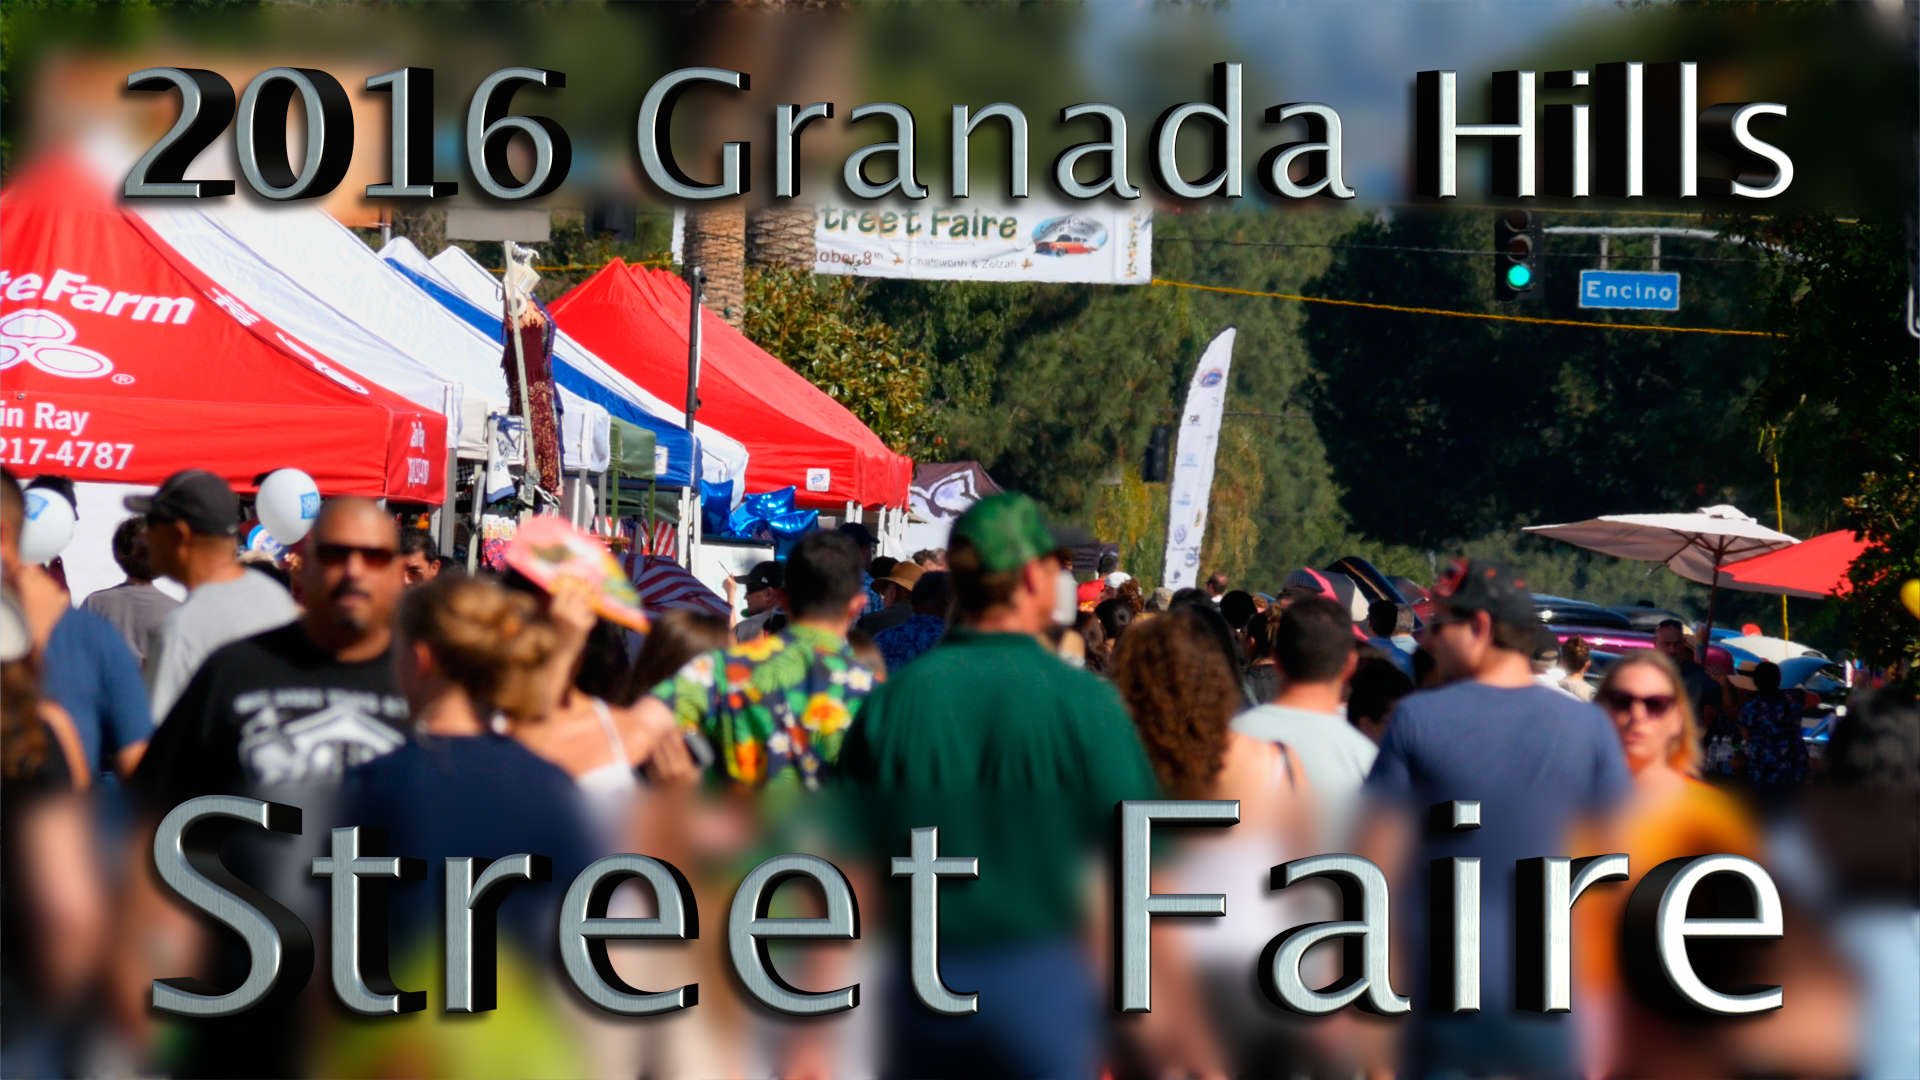 2016 Granada Hills Street Faire Video